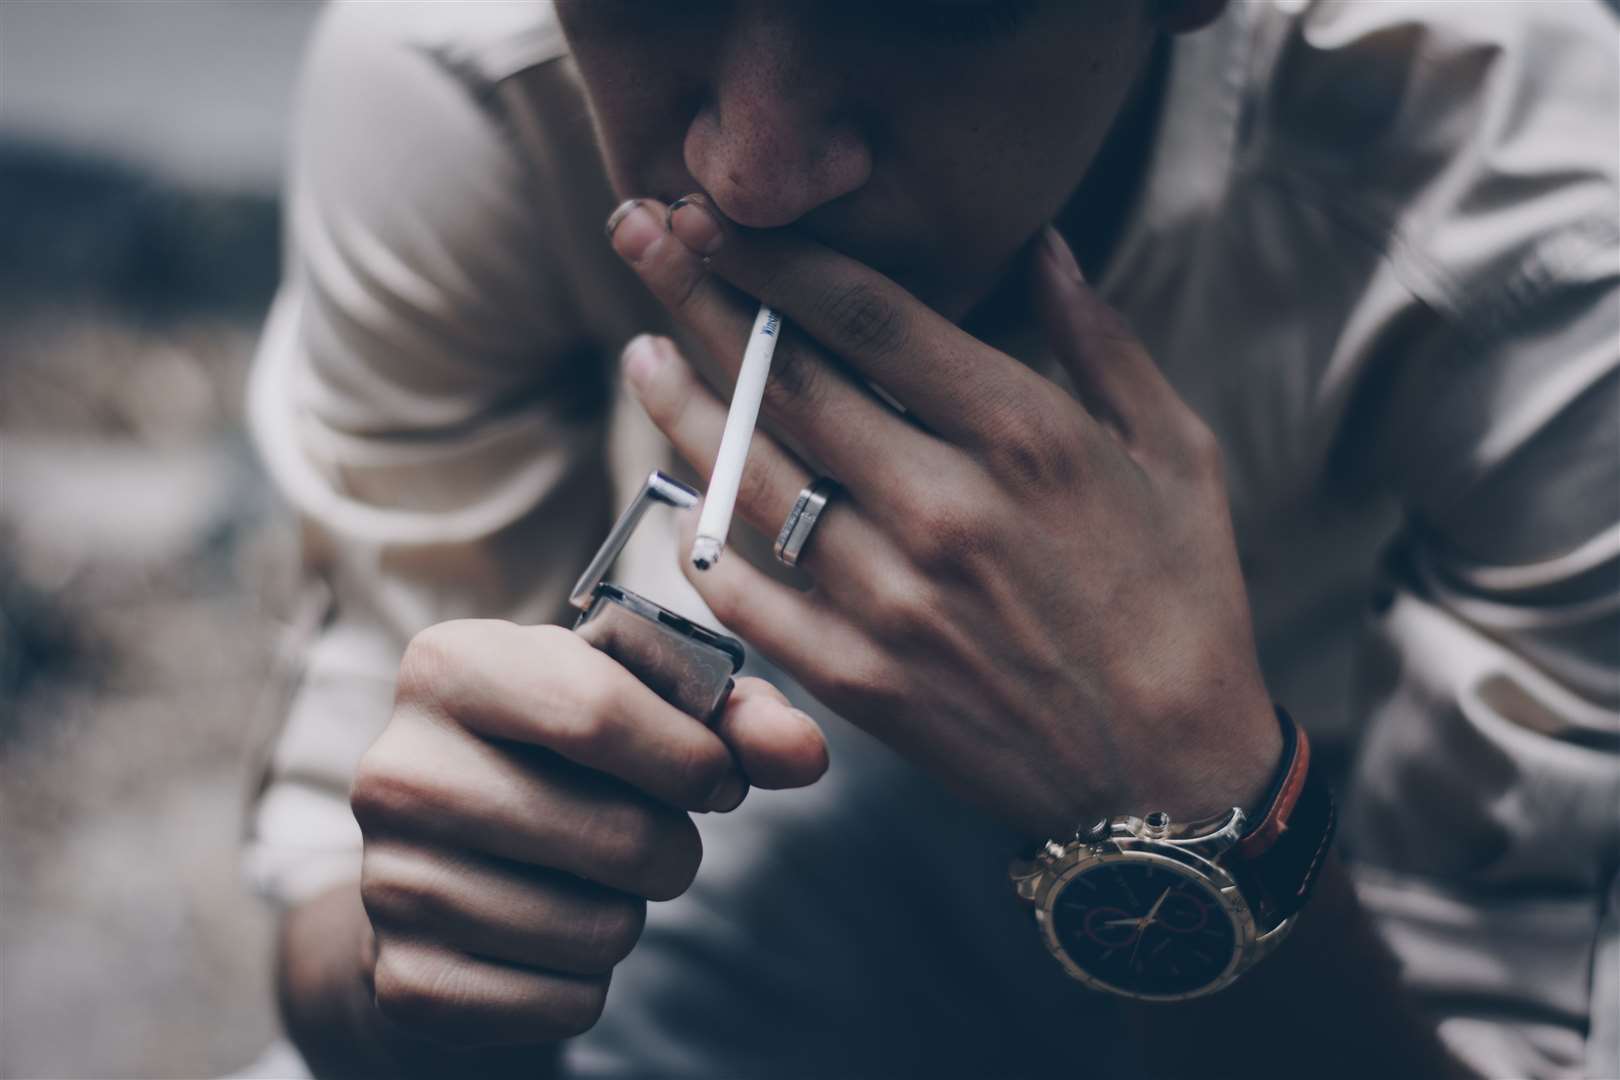 Stock image of a man smoking a cigarette. Photo: Sajjad Zabihi